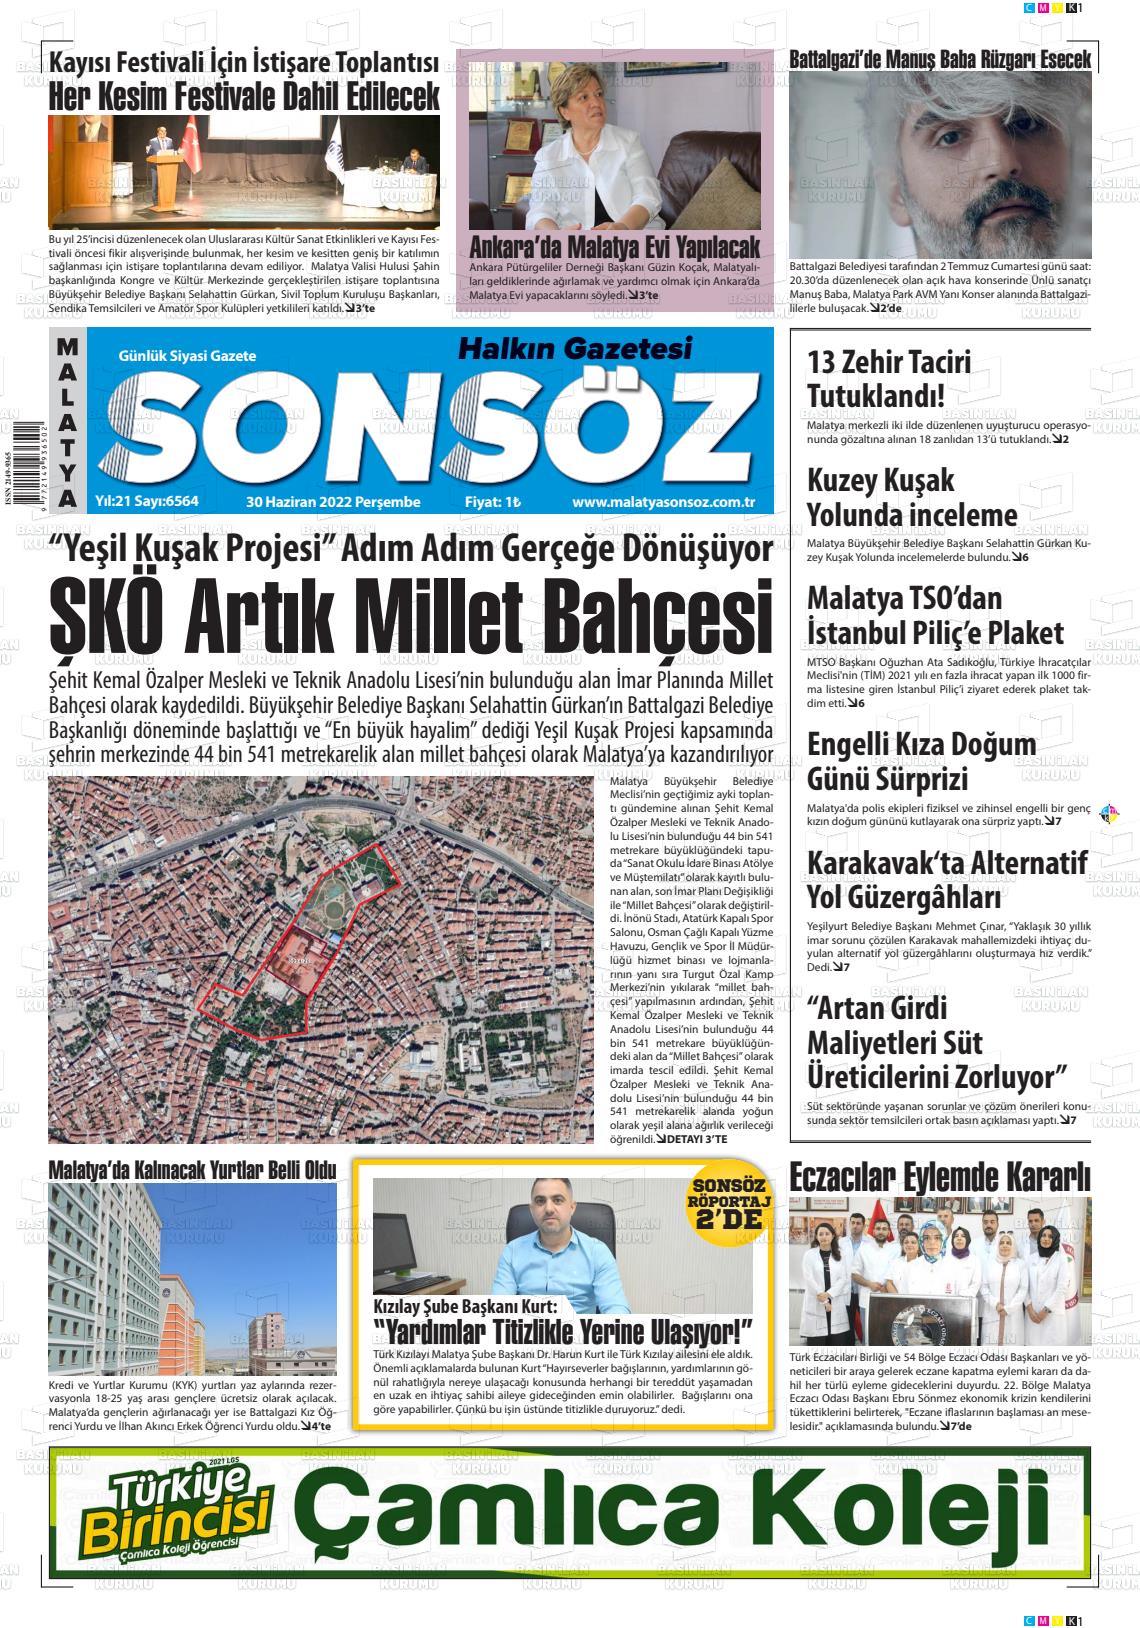 30 Haziran 2022 Sonsöz Gazete Manşeti